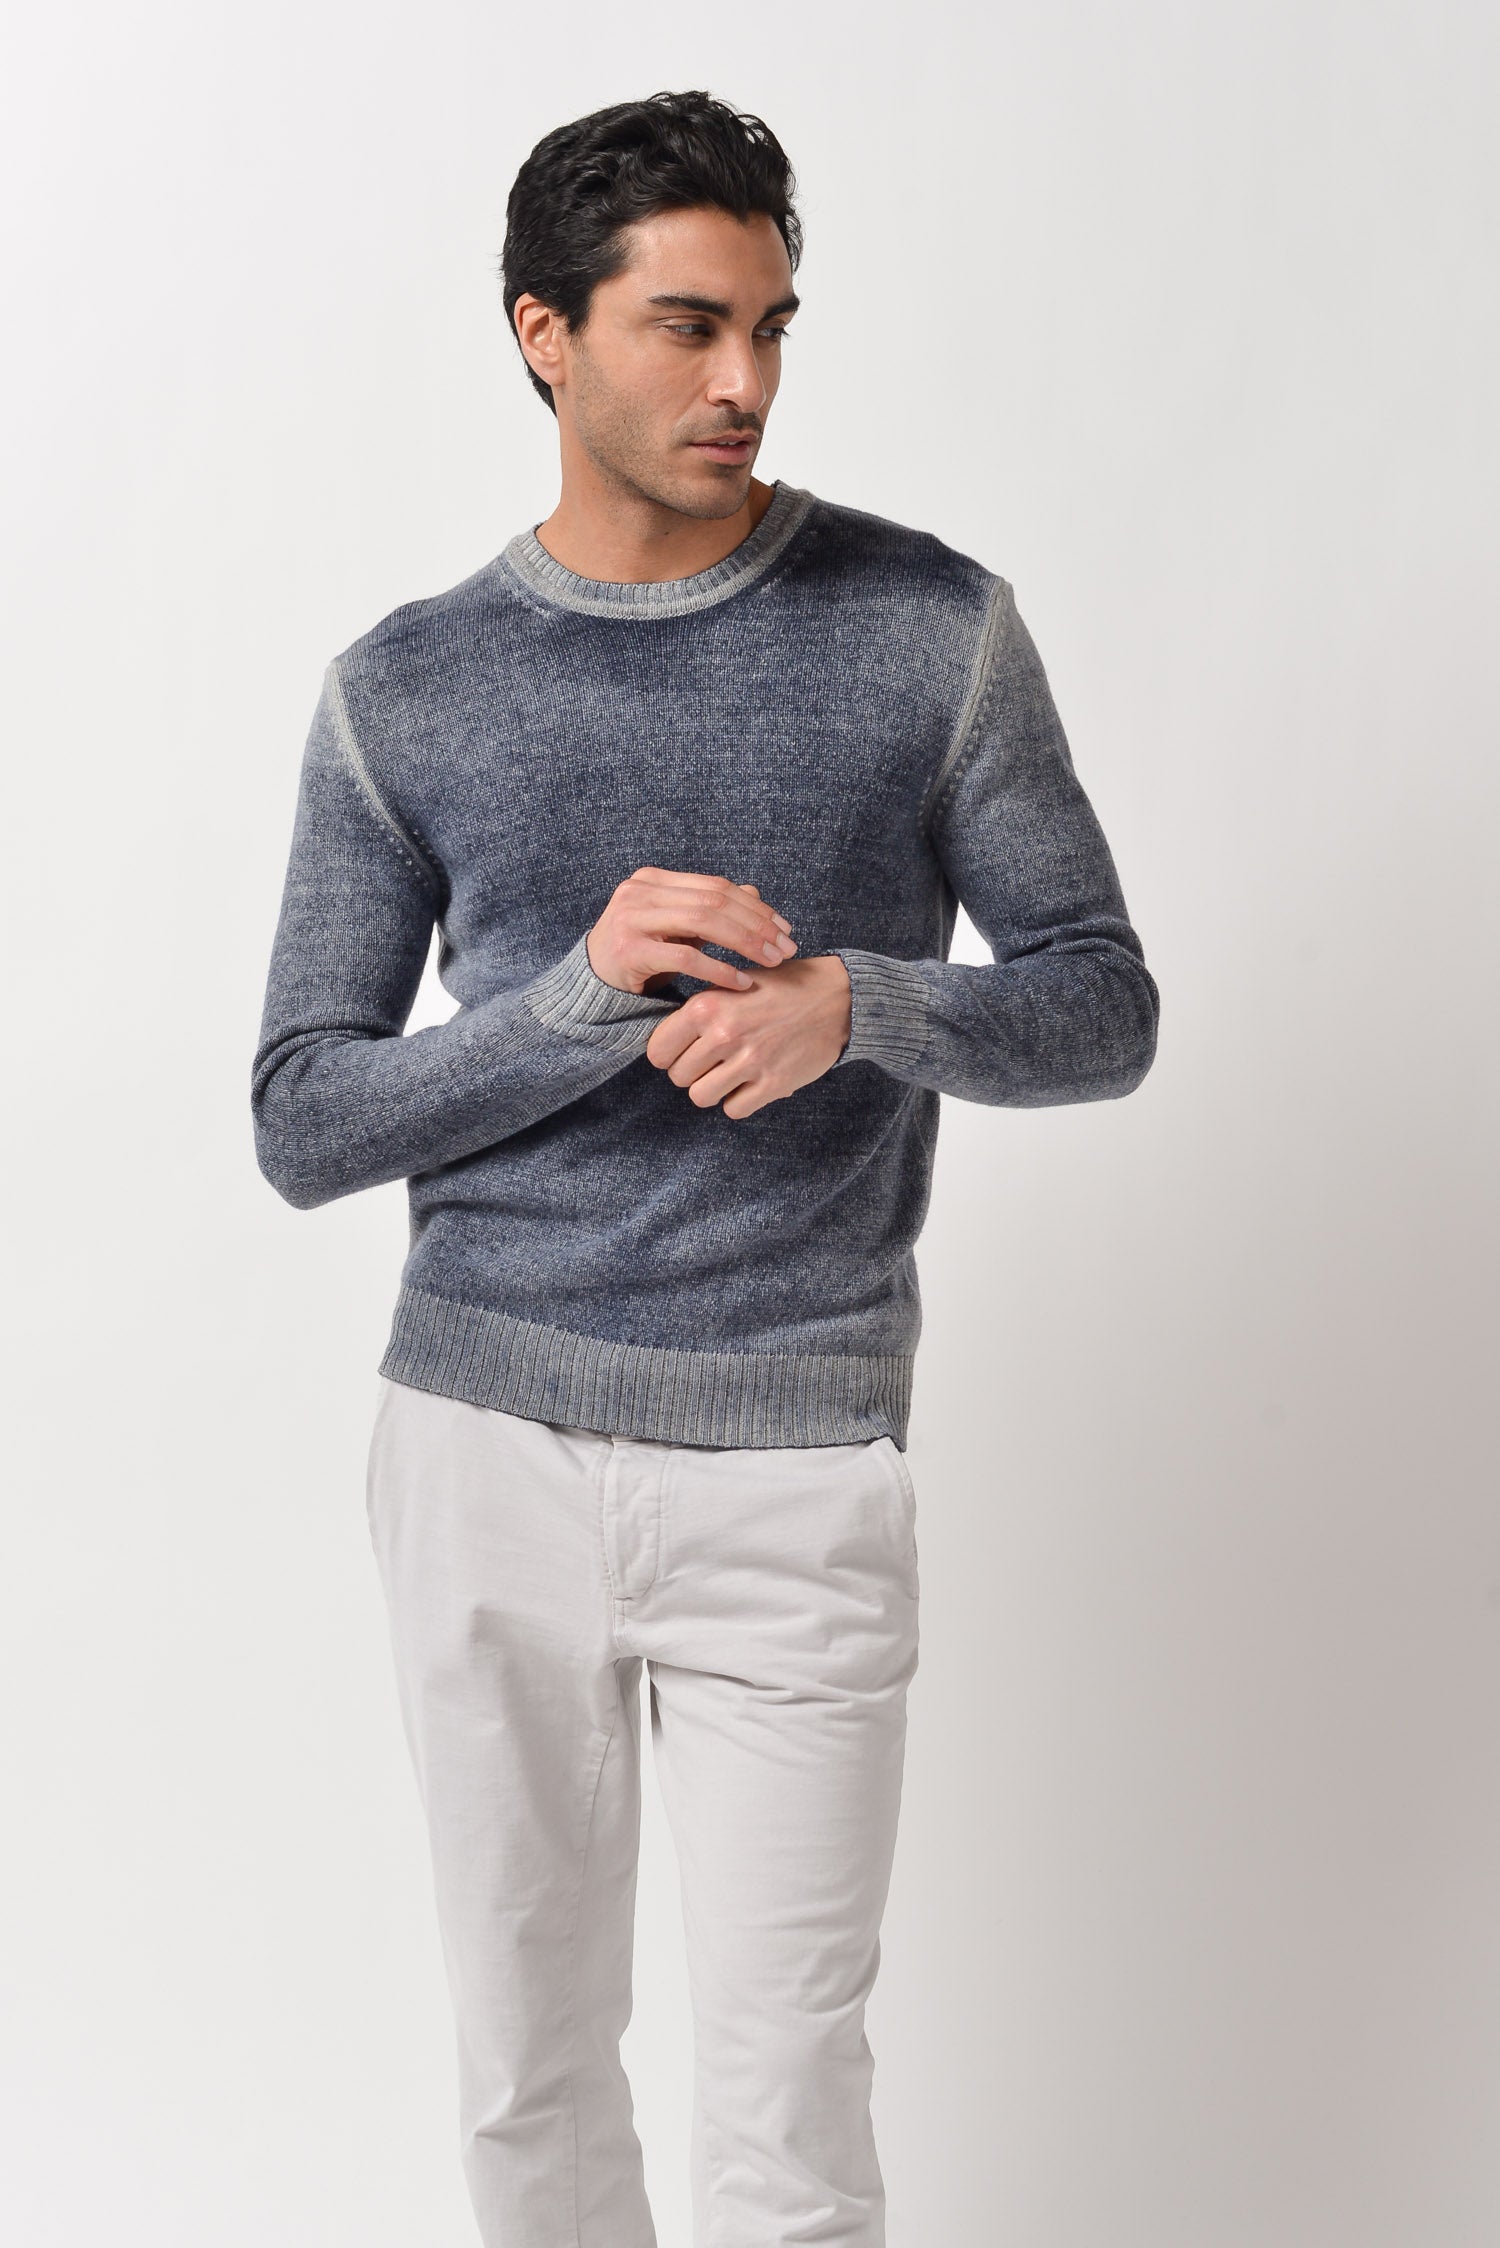 Holden Frost Art Sweater - Navy